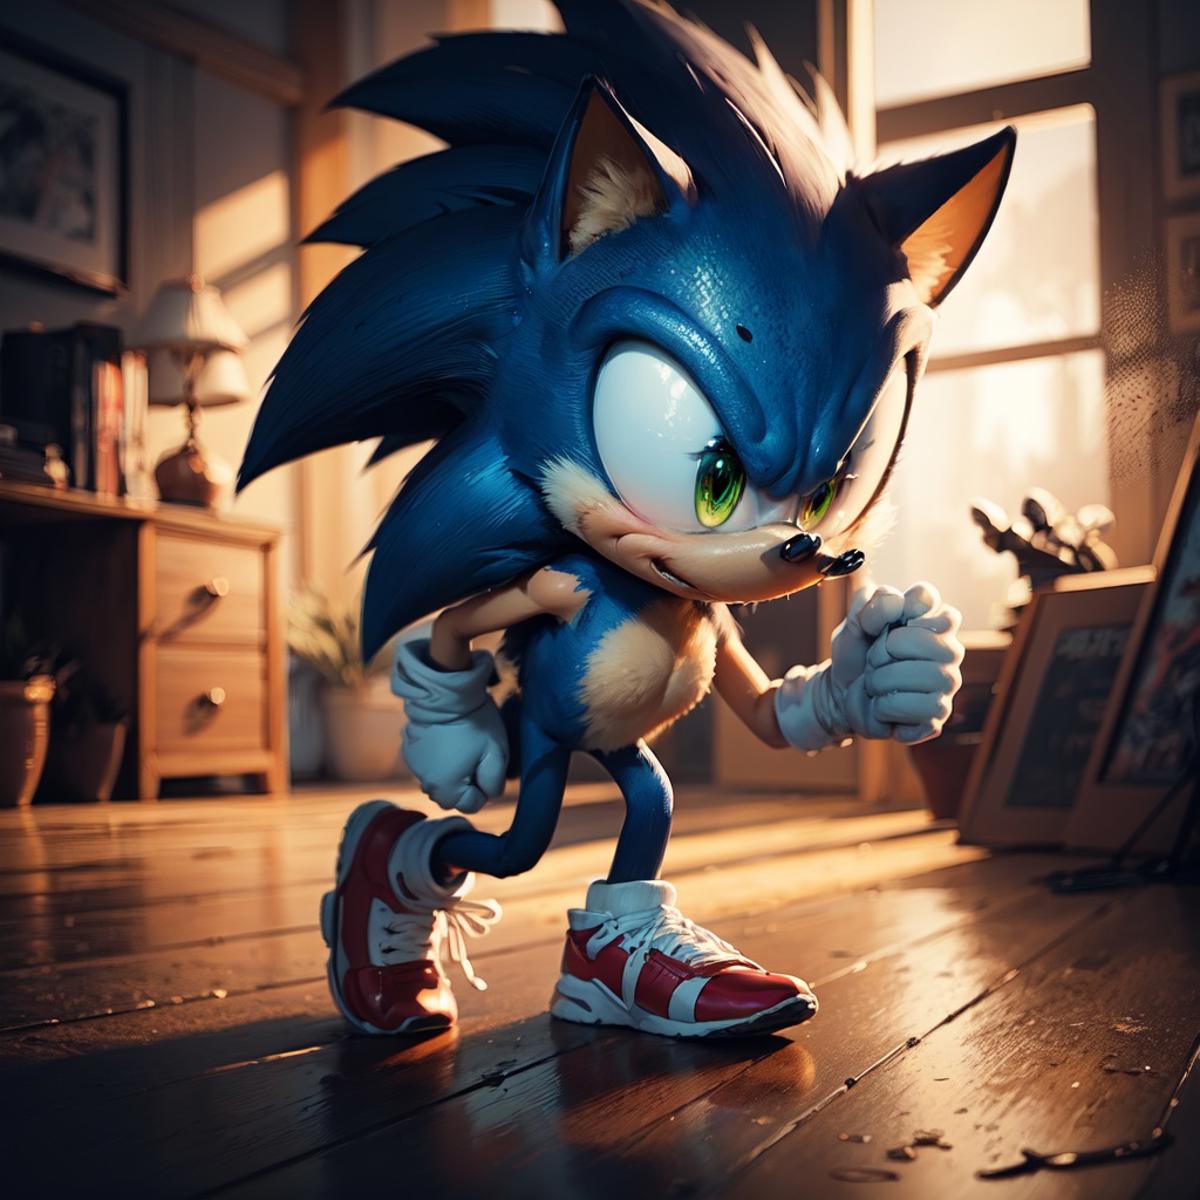 Sonic the Hedgehog image by SteamDad